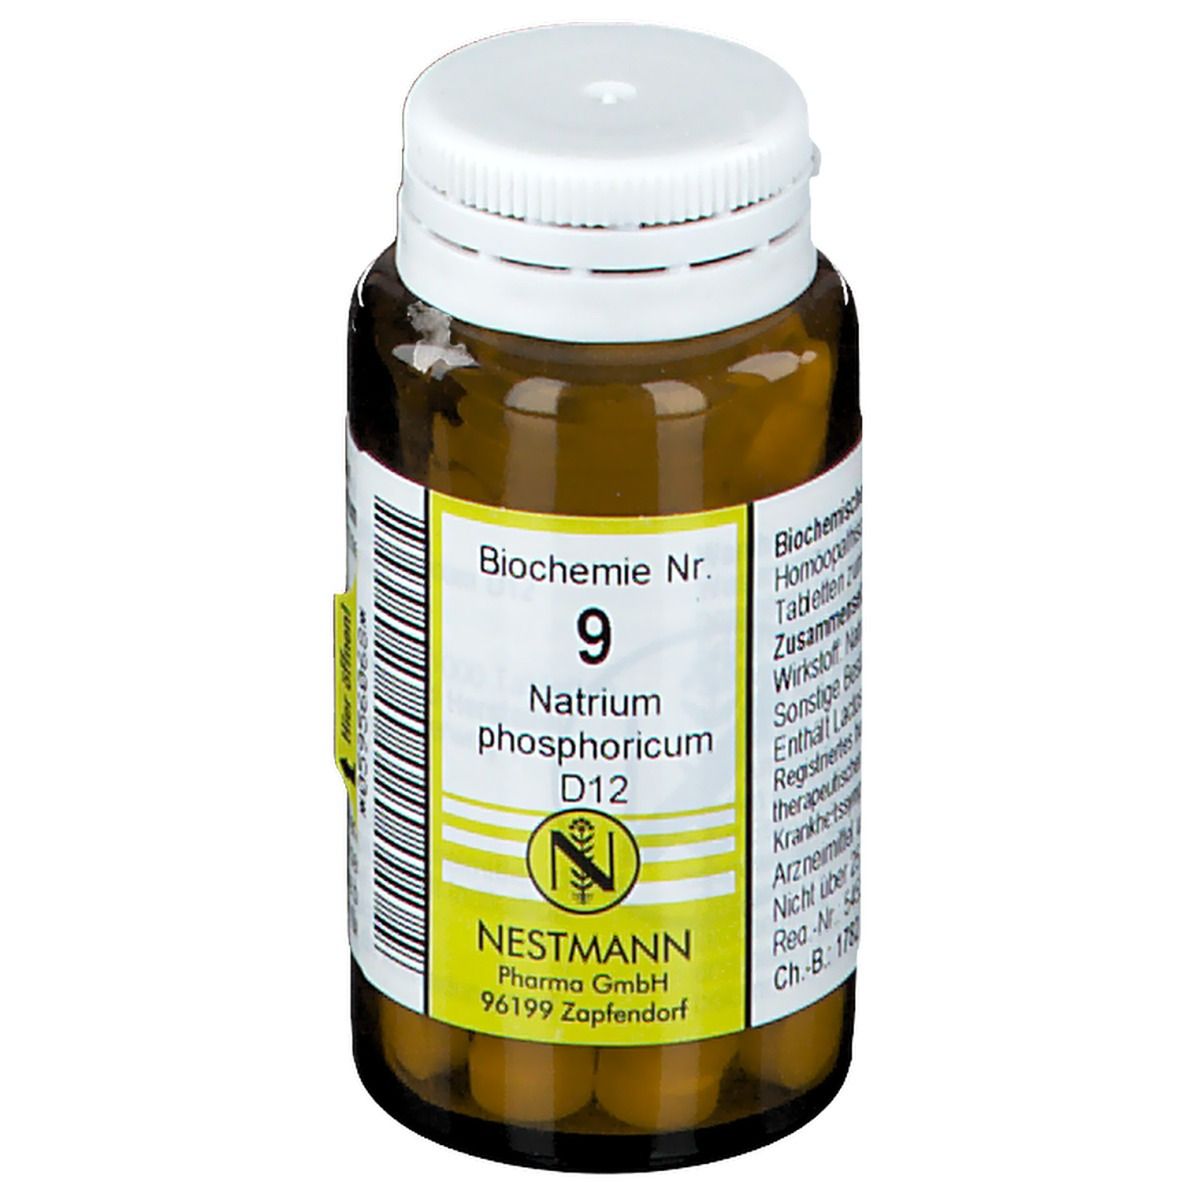 Biochemie Nr. 9 Natrium phosphoricum D12